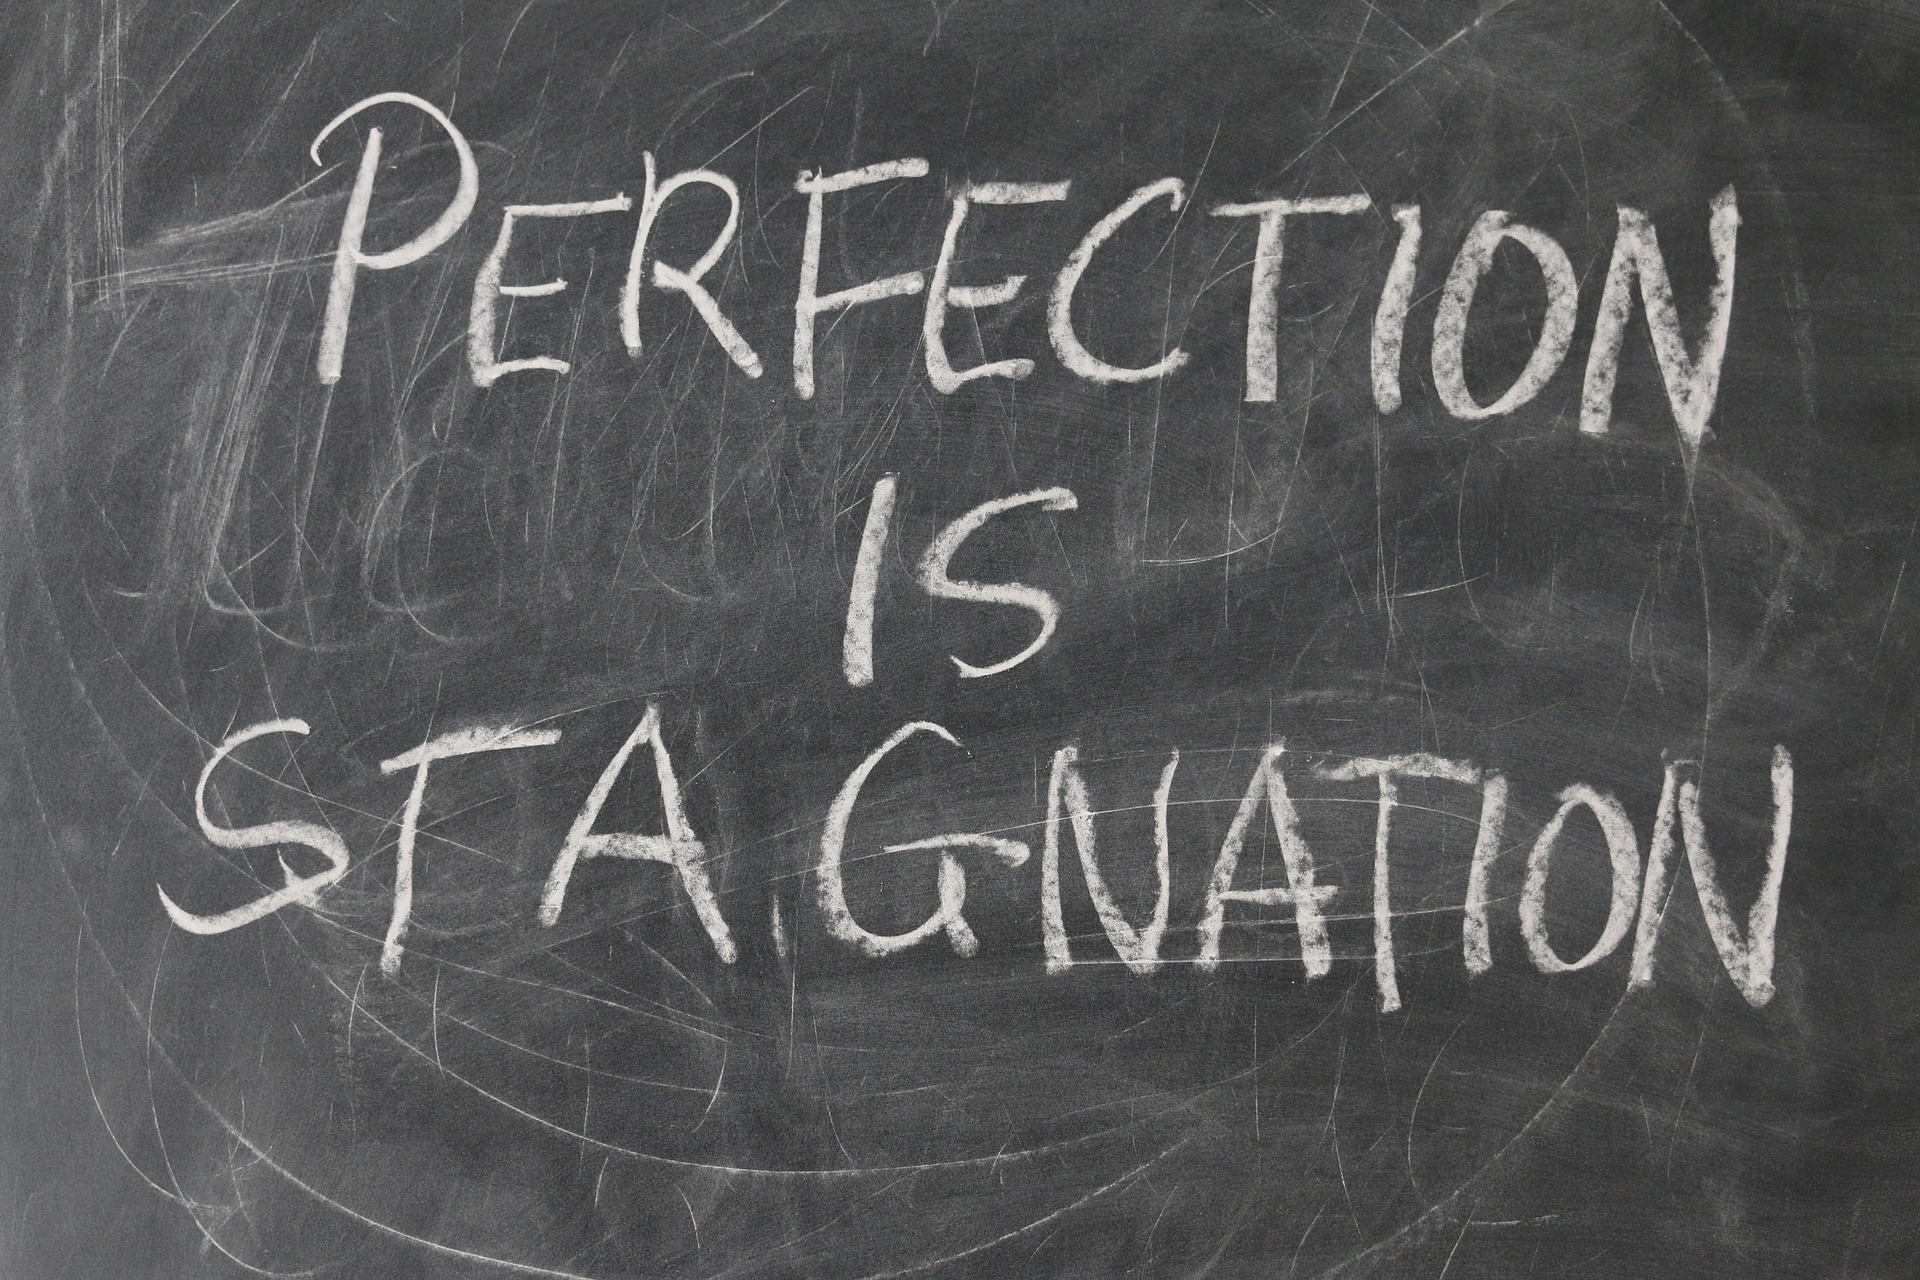 Perfection is stagnation on blackboard